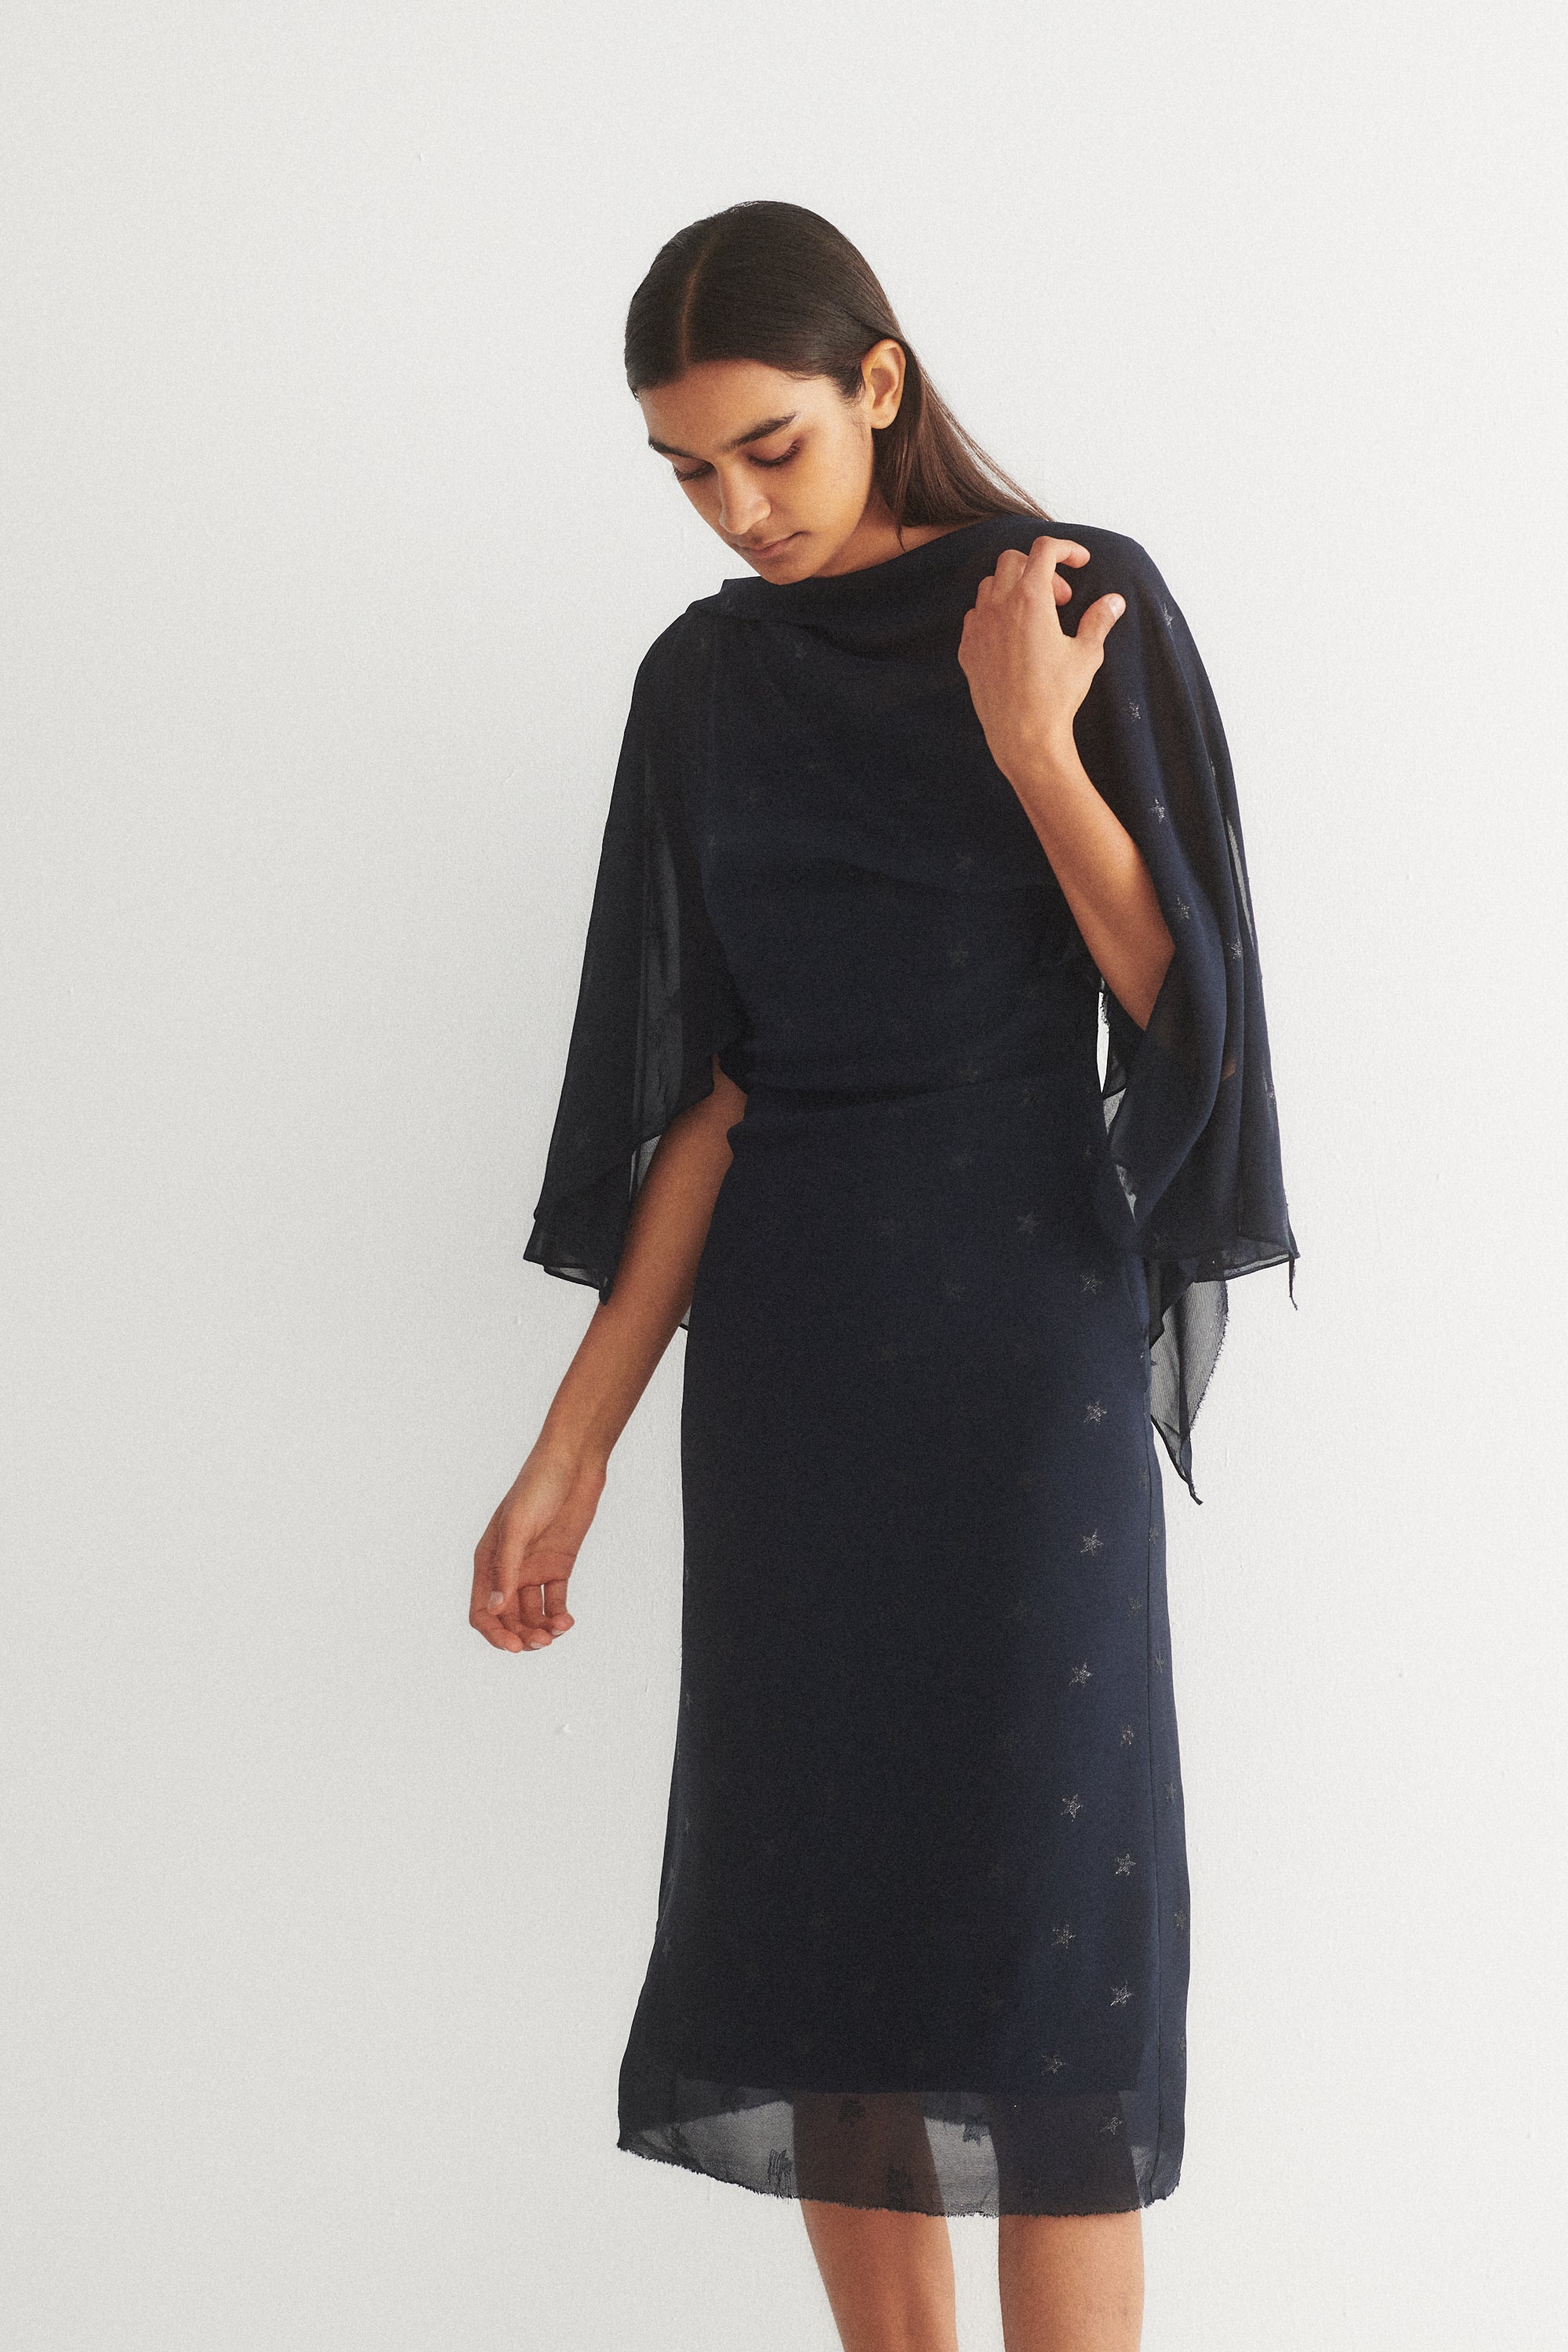 ss 2001 Miguel Adrover Star Print Dress - Desert Vintage